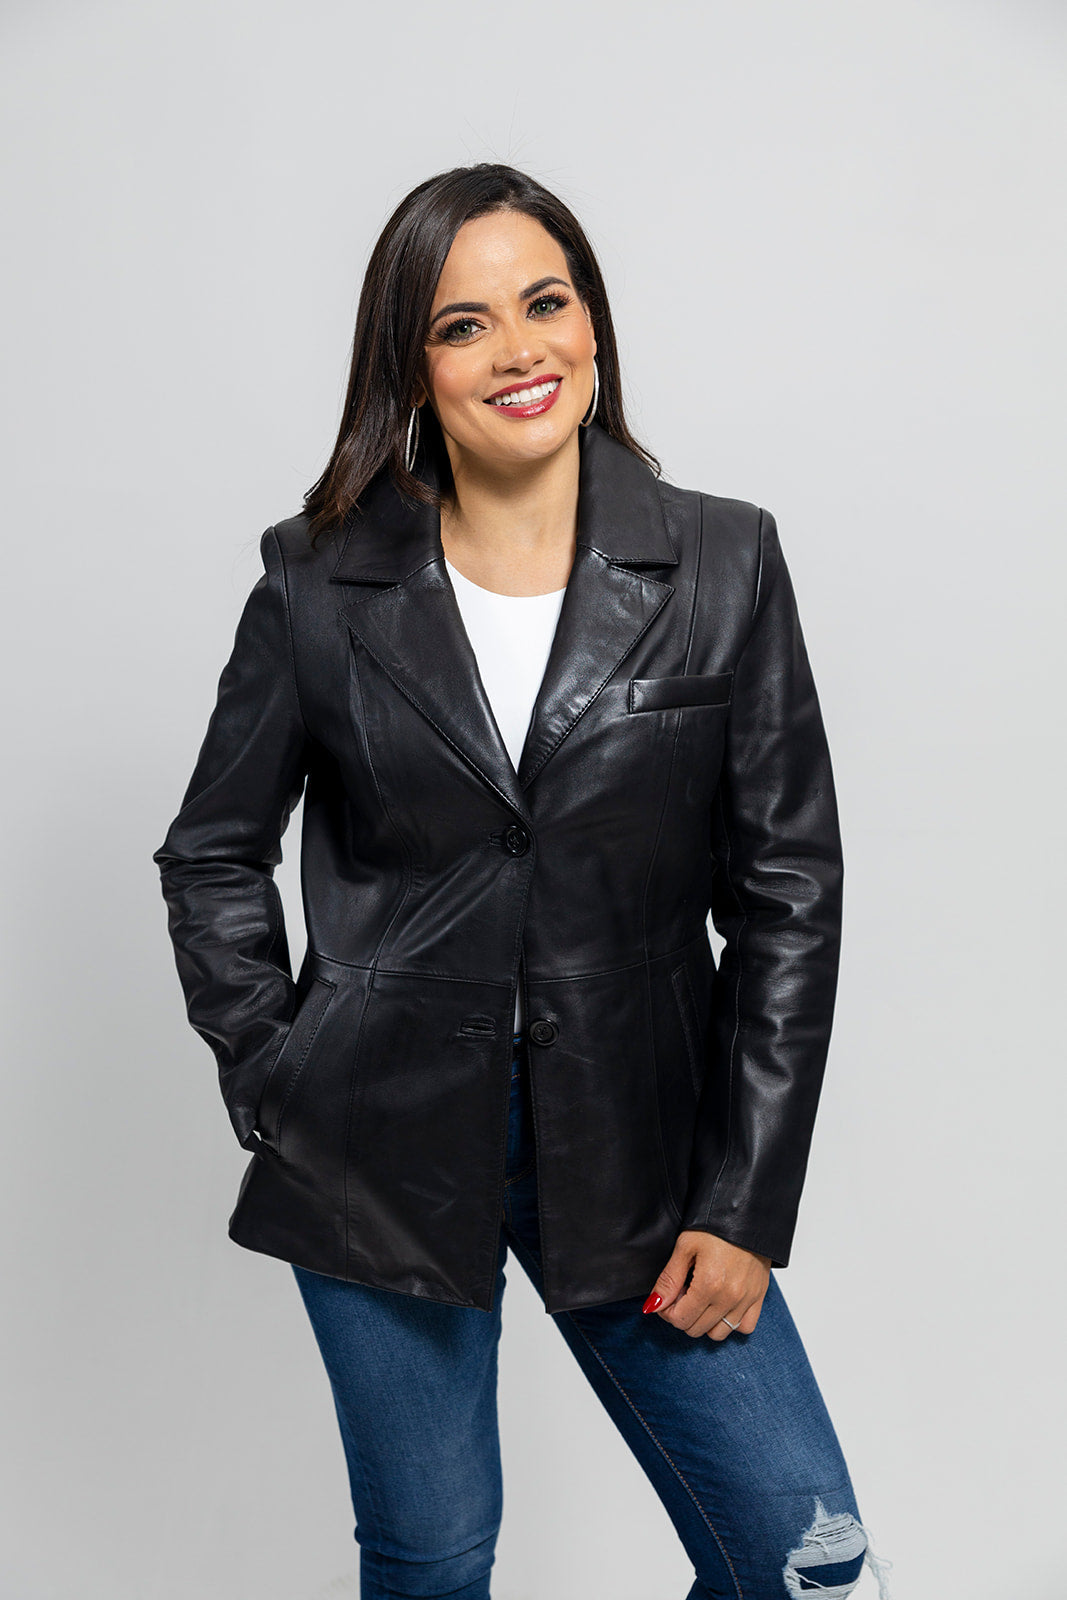 Dahlia Womens Fashion Leather Jacket Women's Leather Jacket Whet Blu NYC   